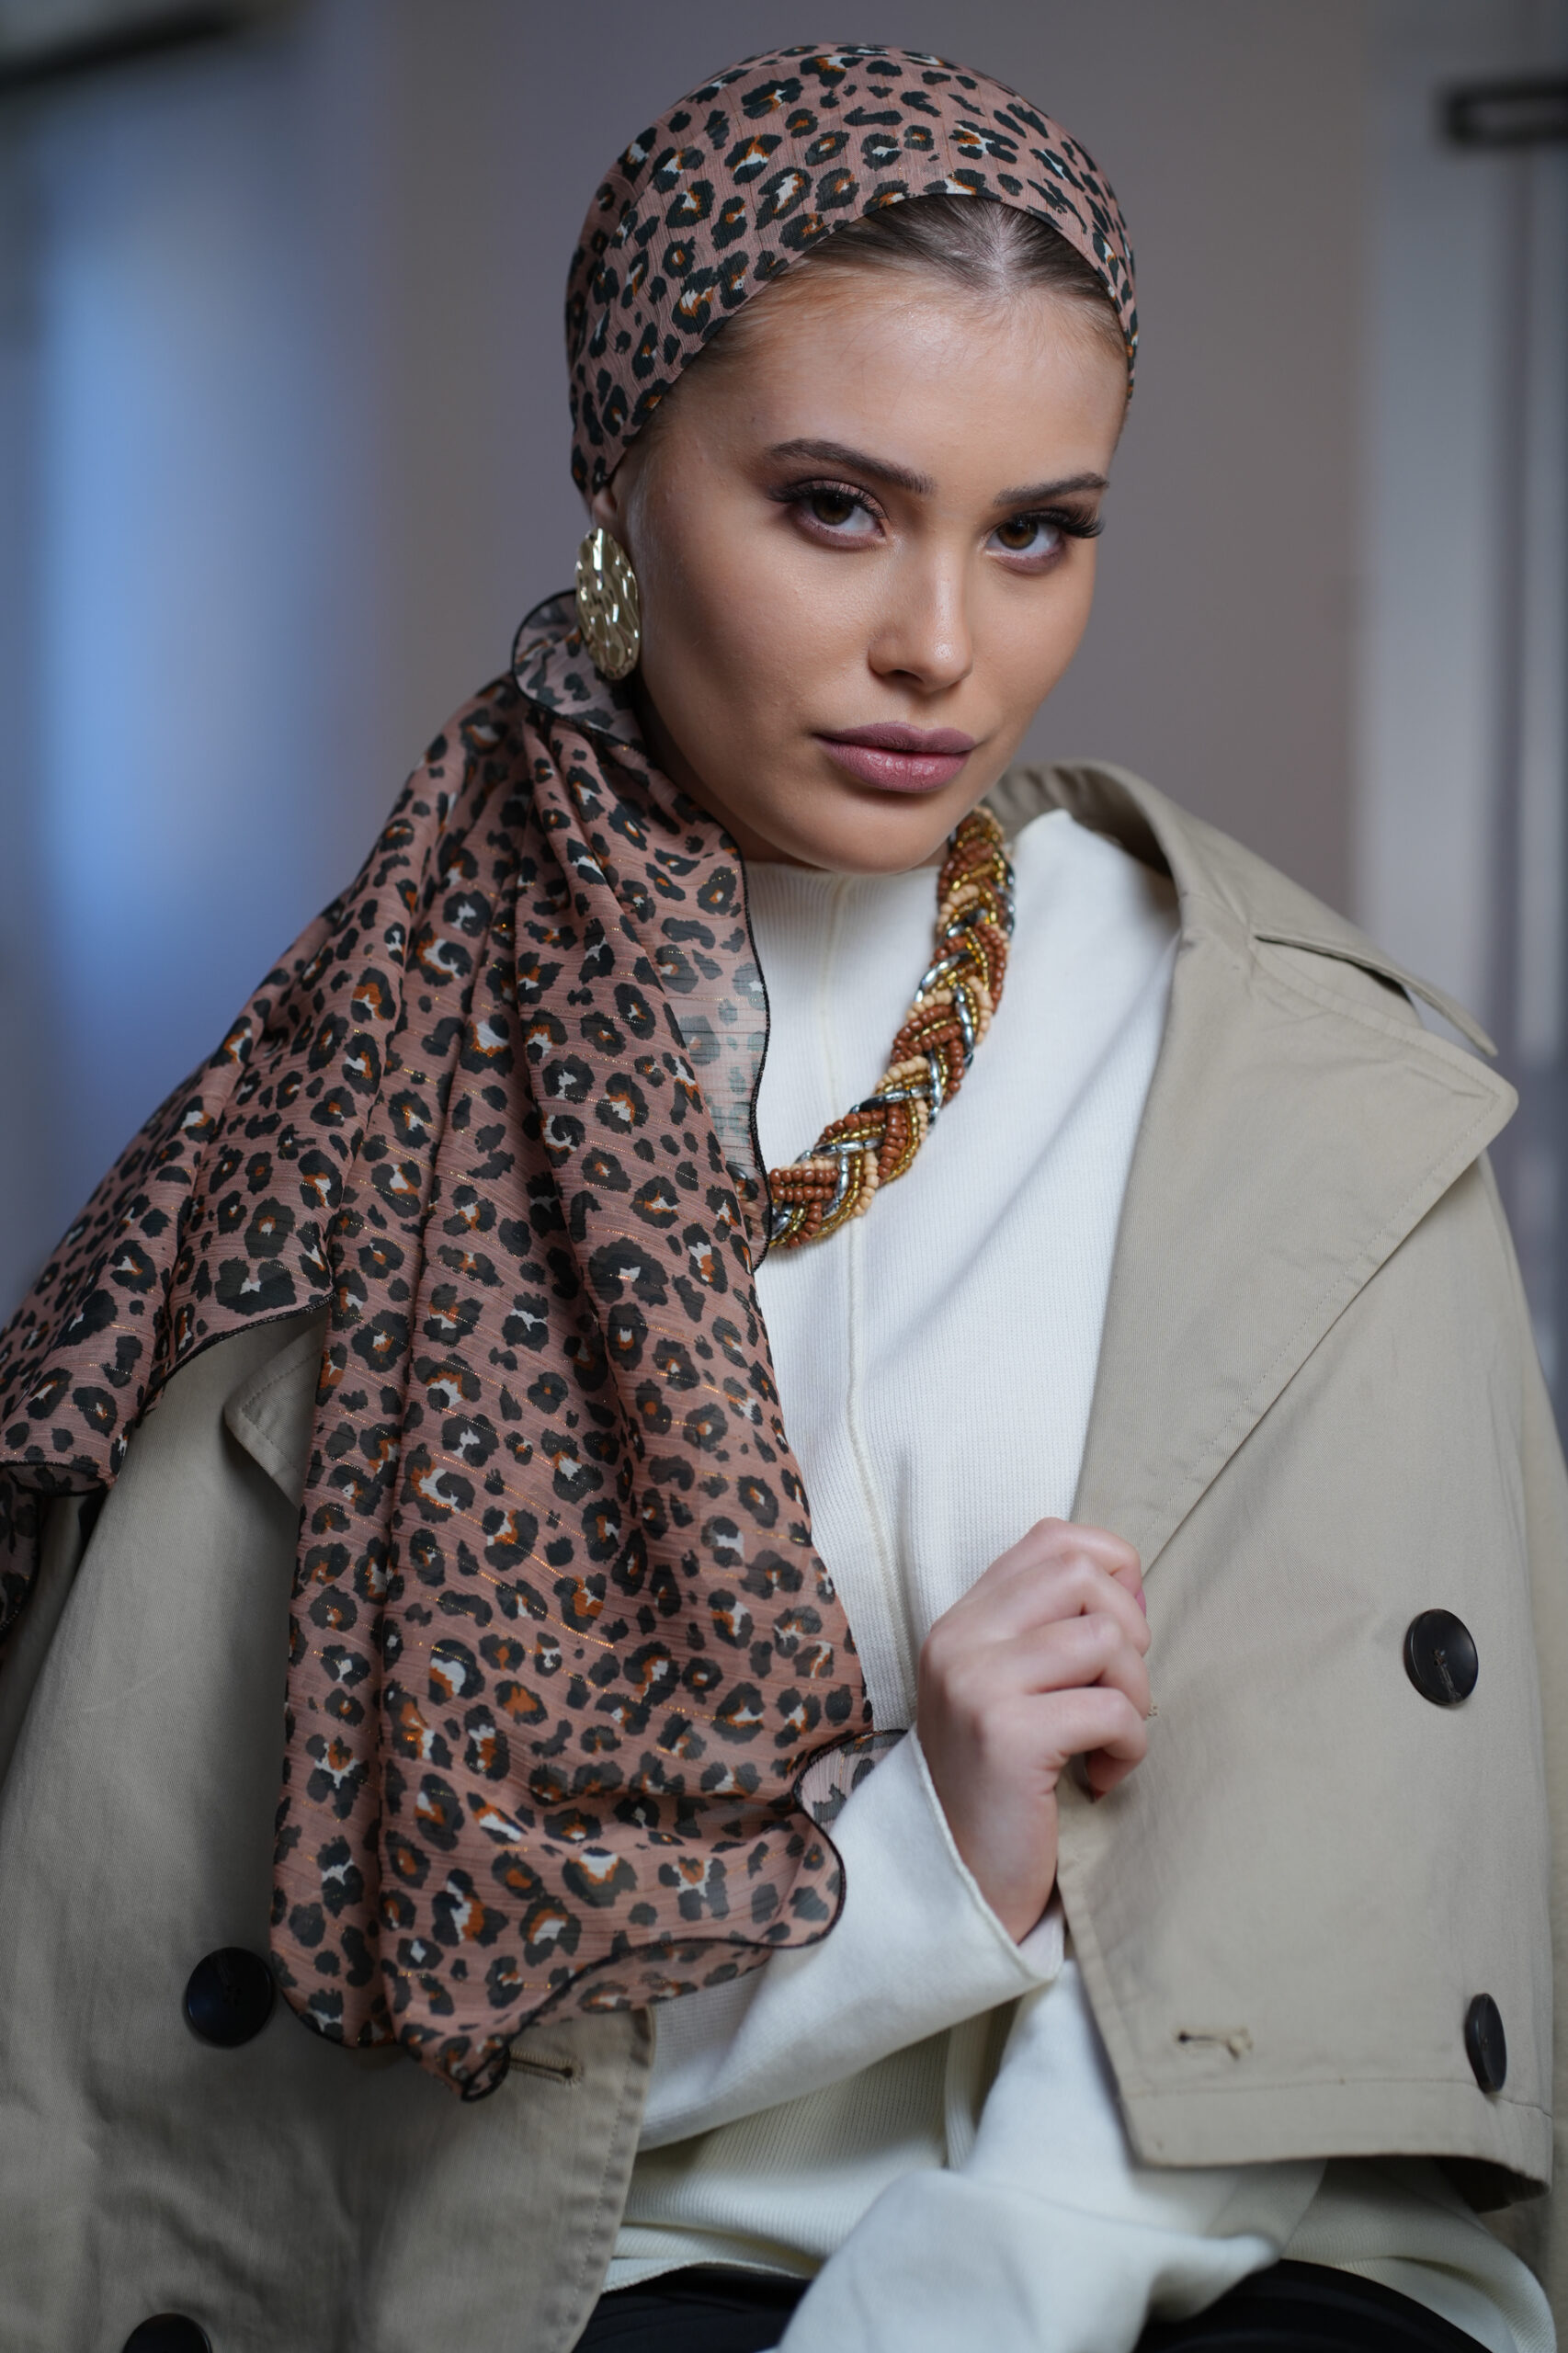 Printed Leopard Headscarf